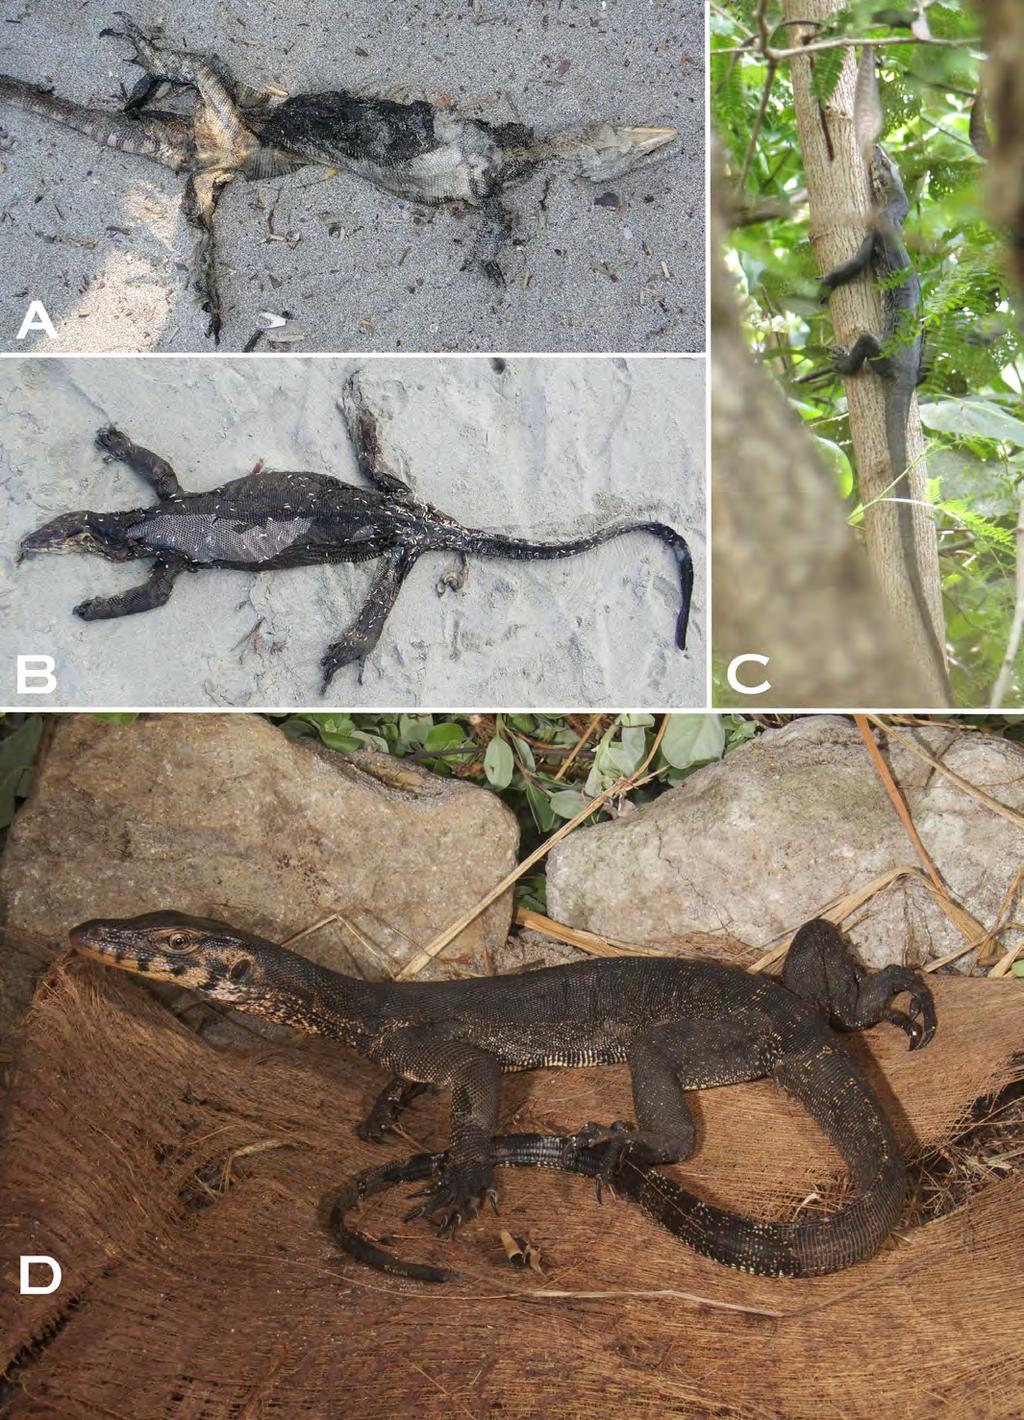 Kaiser et al. Herpetofauna of Ataúro Island, Timor-Leste Figure 6. Monitor lizard (Varanus sp.) from Ataúro Island, Timor-Leste. (A) Carcass found on the beach.